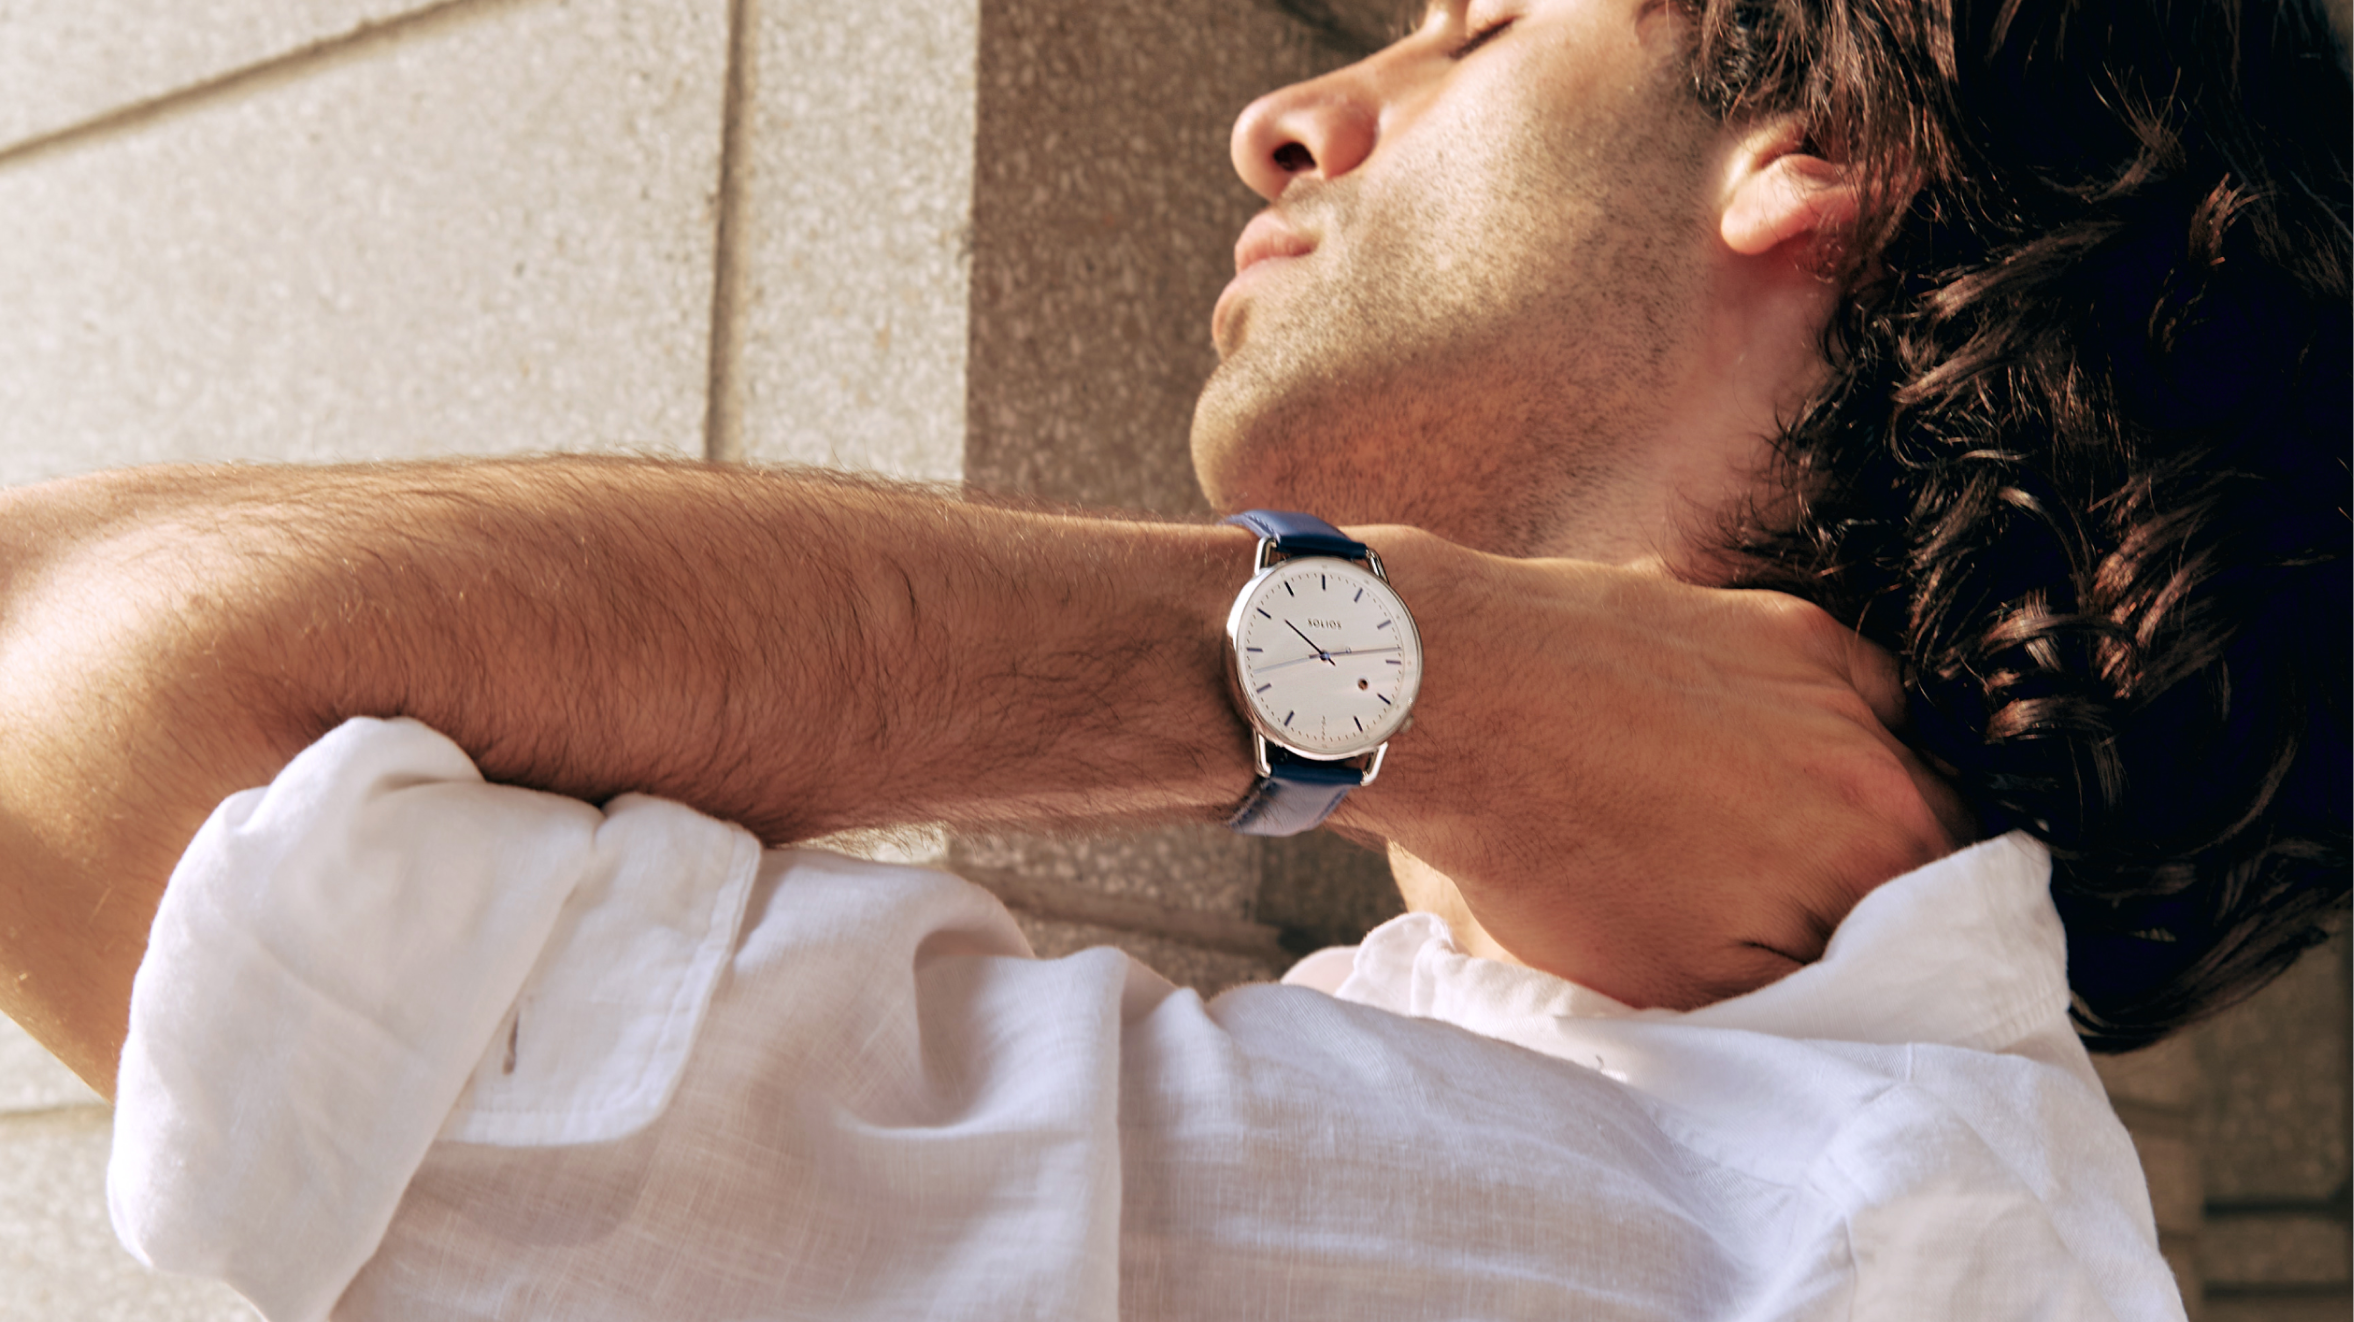 Solar powered watch on men's wrist